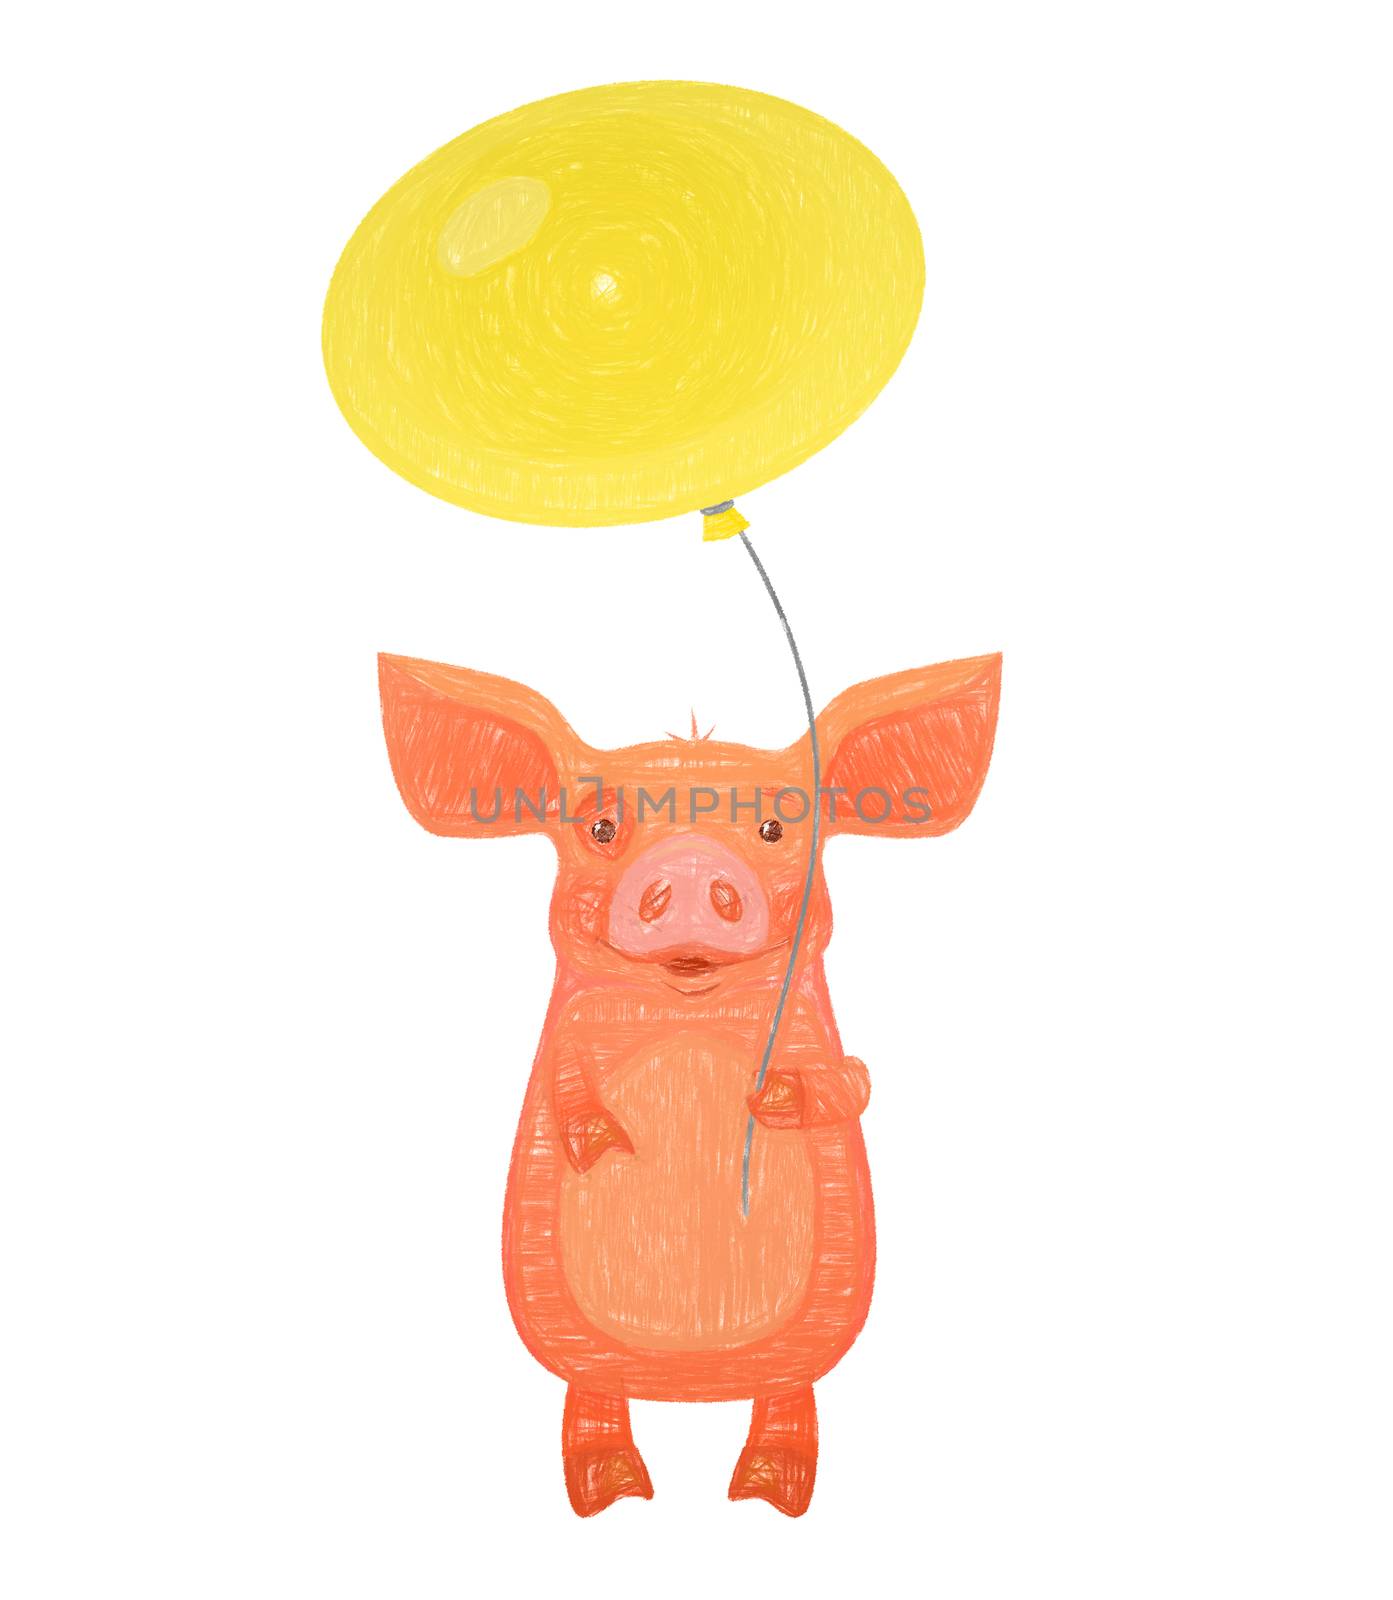 Cute pig holding balloon. Good mood illustration